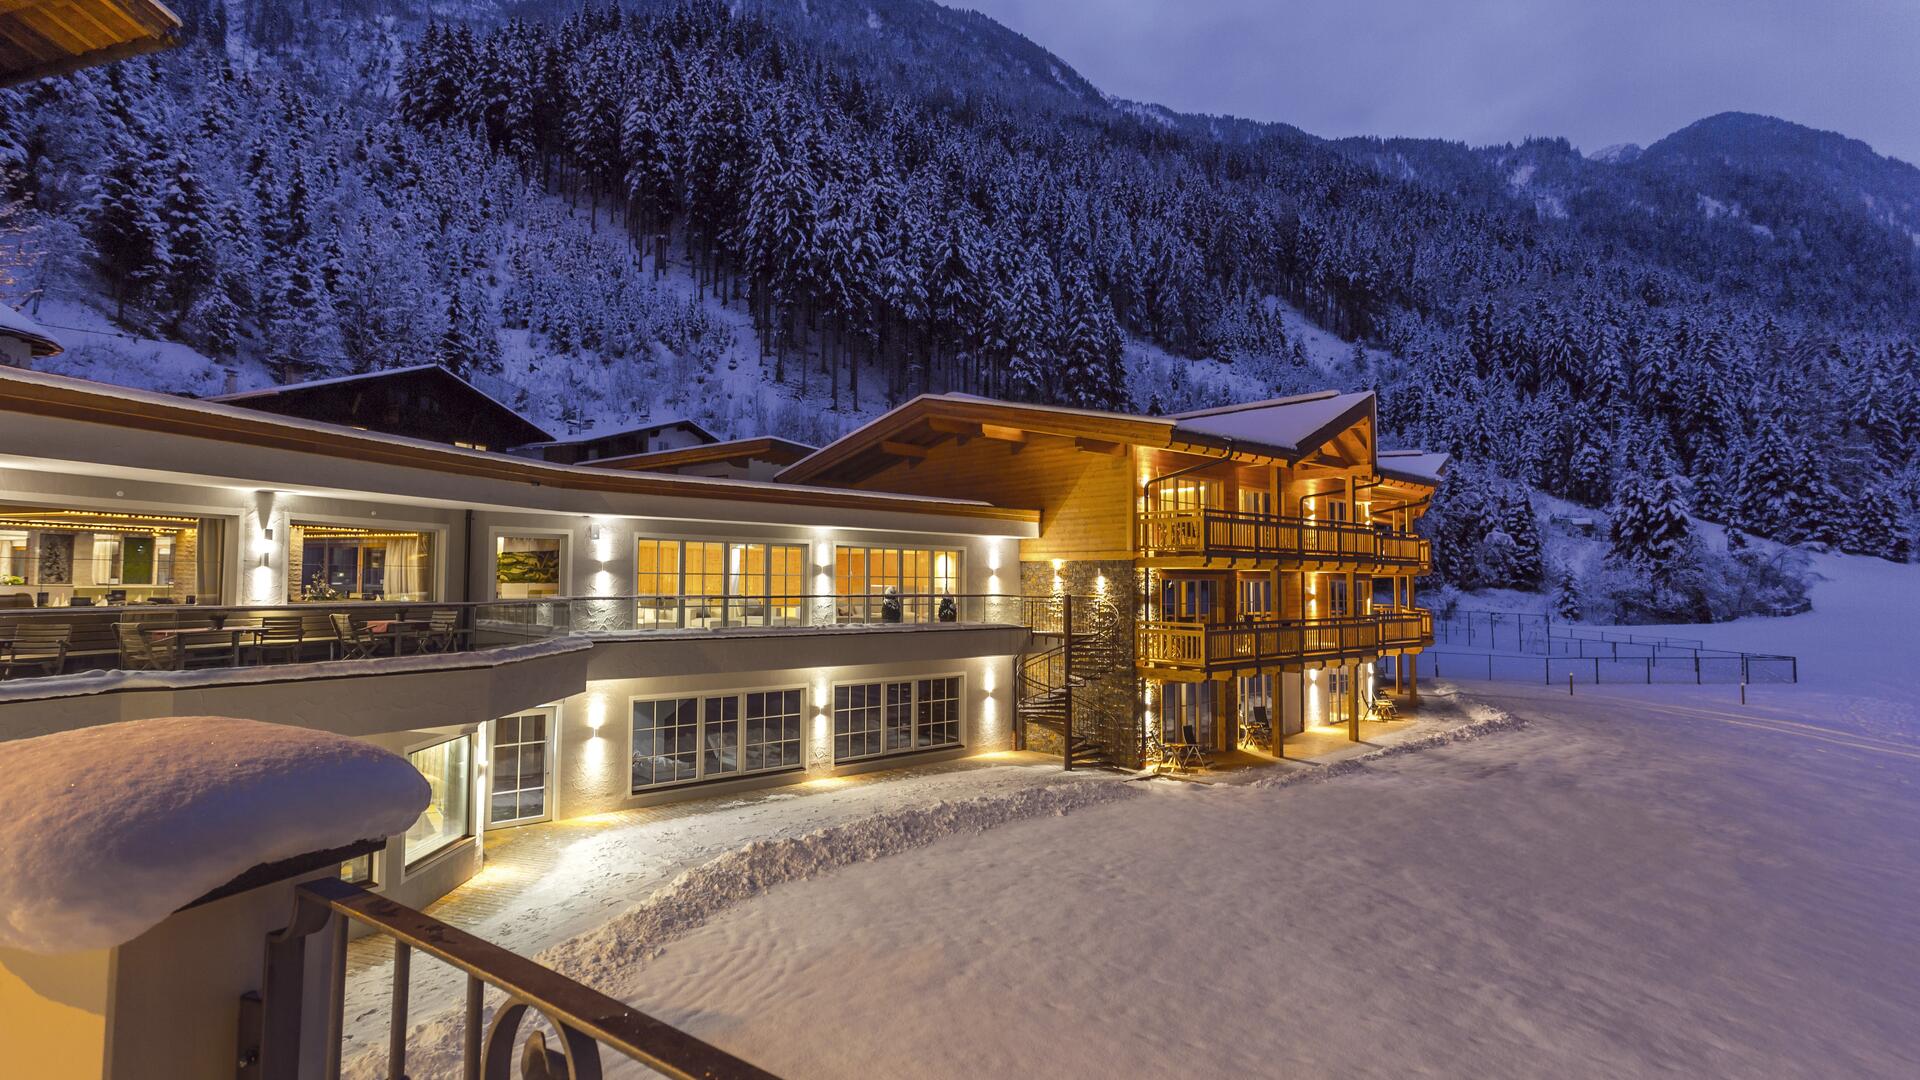 Stubai valley winter holiday Hotel